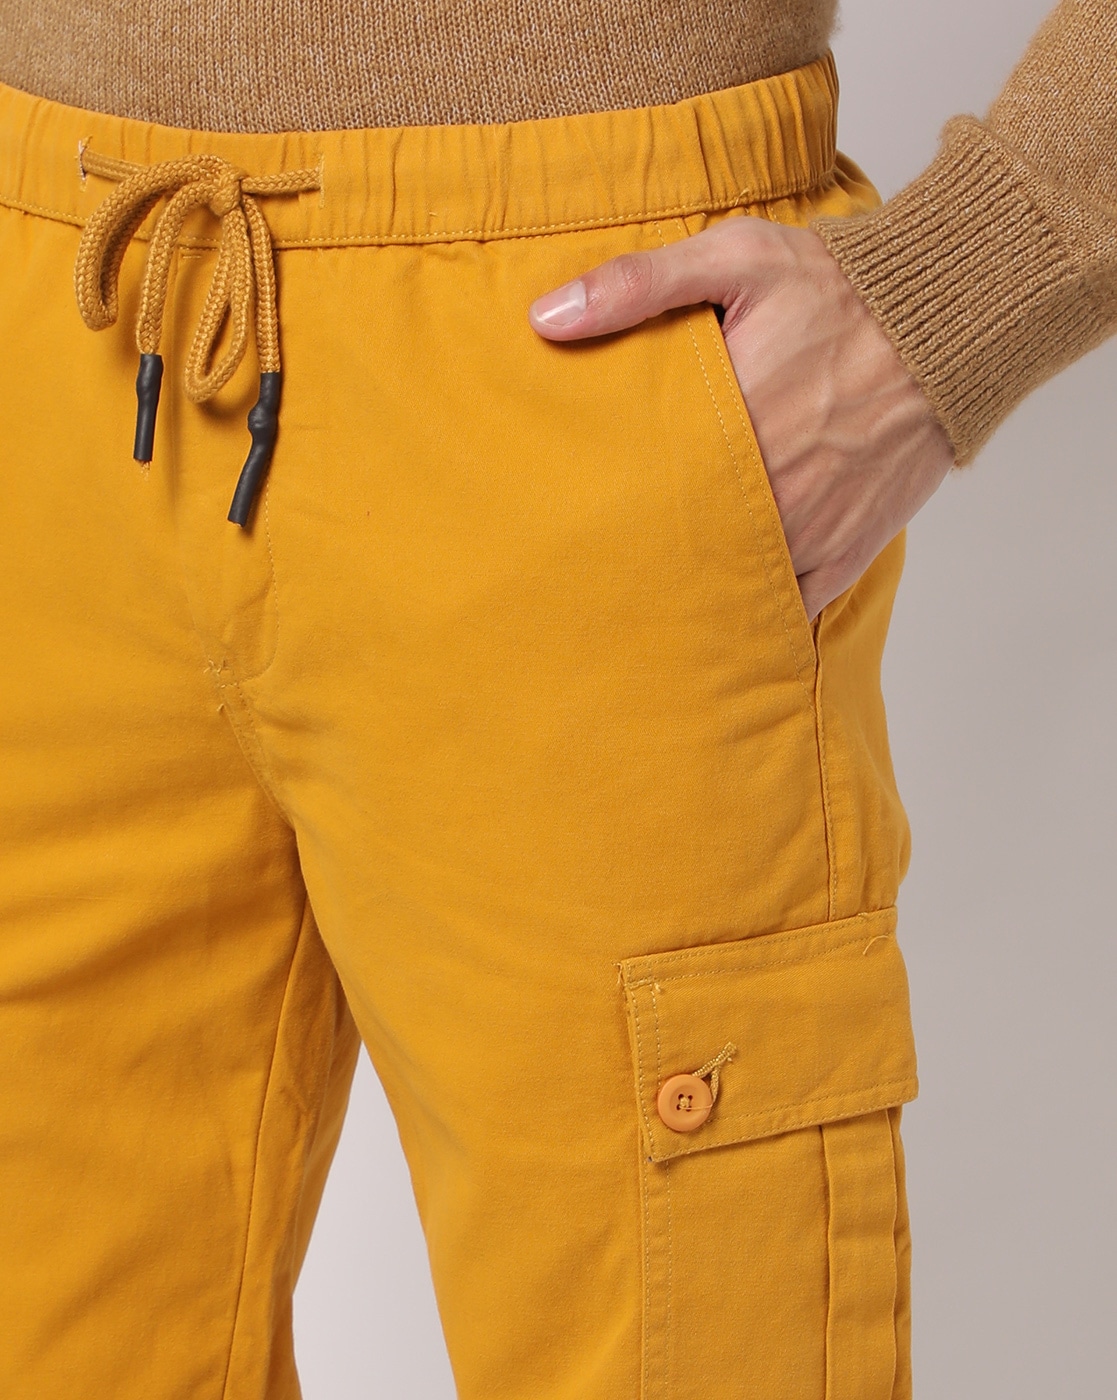 Swedemount ST. ANTON SKI PANTS - Ski pants - mustard yellow - Zalando.ie